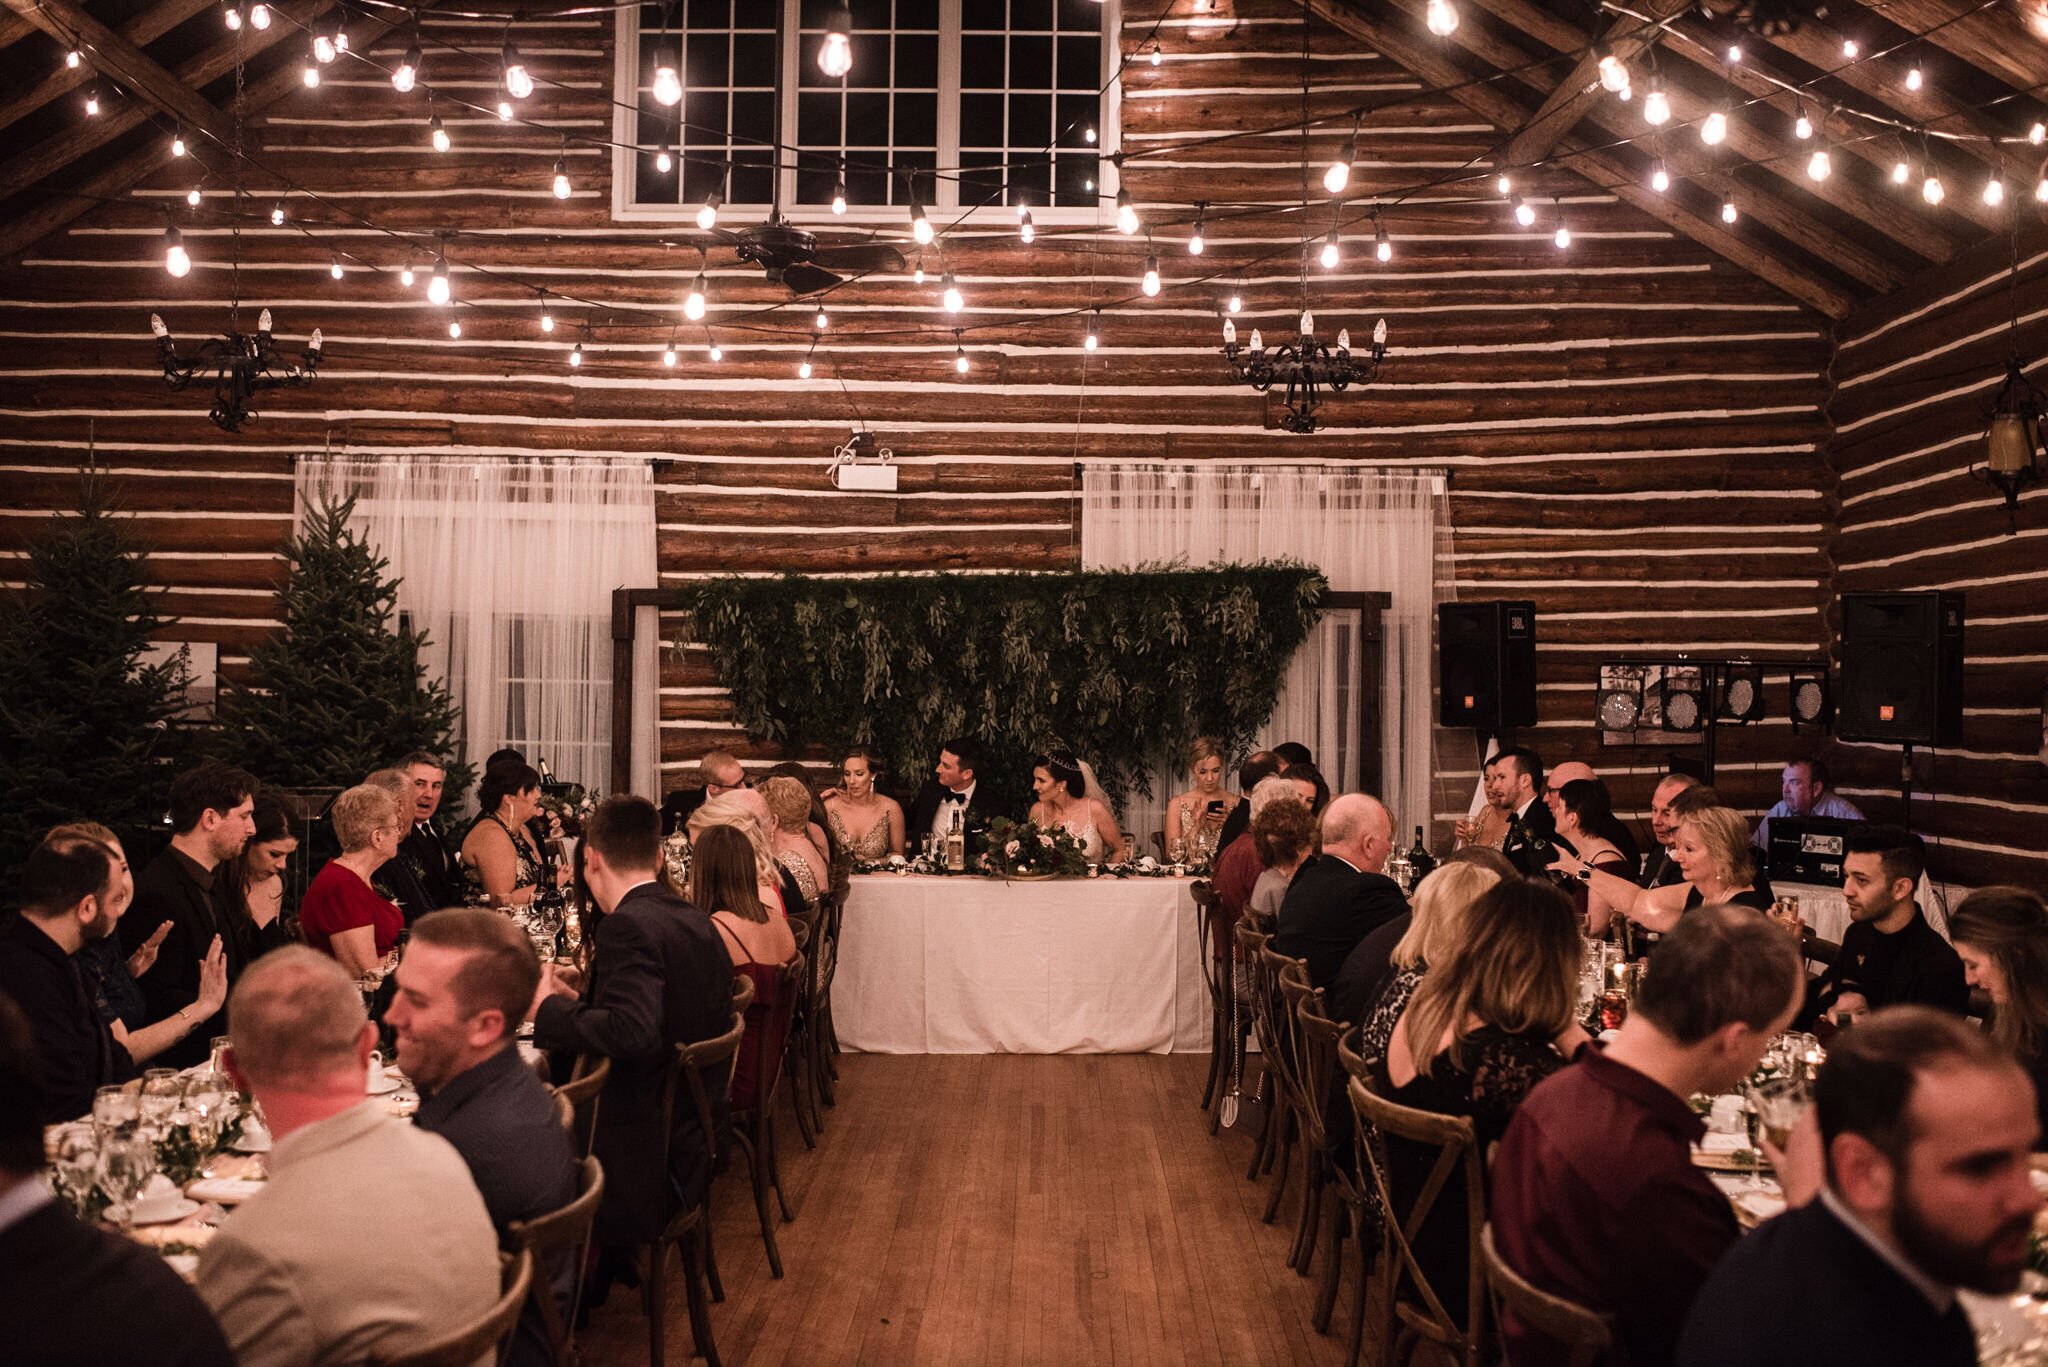 280-dinner-setting-reception-wedding-winter-cozy-string-lights-romantic.jpg